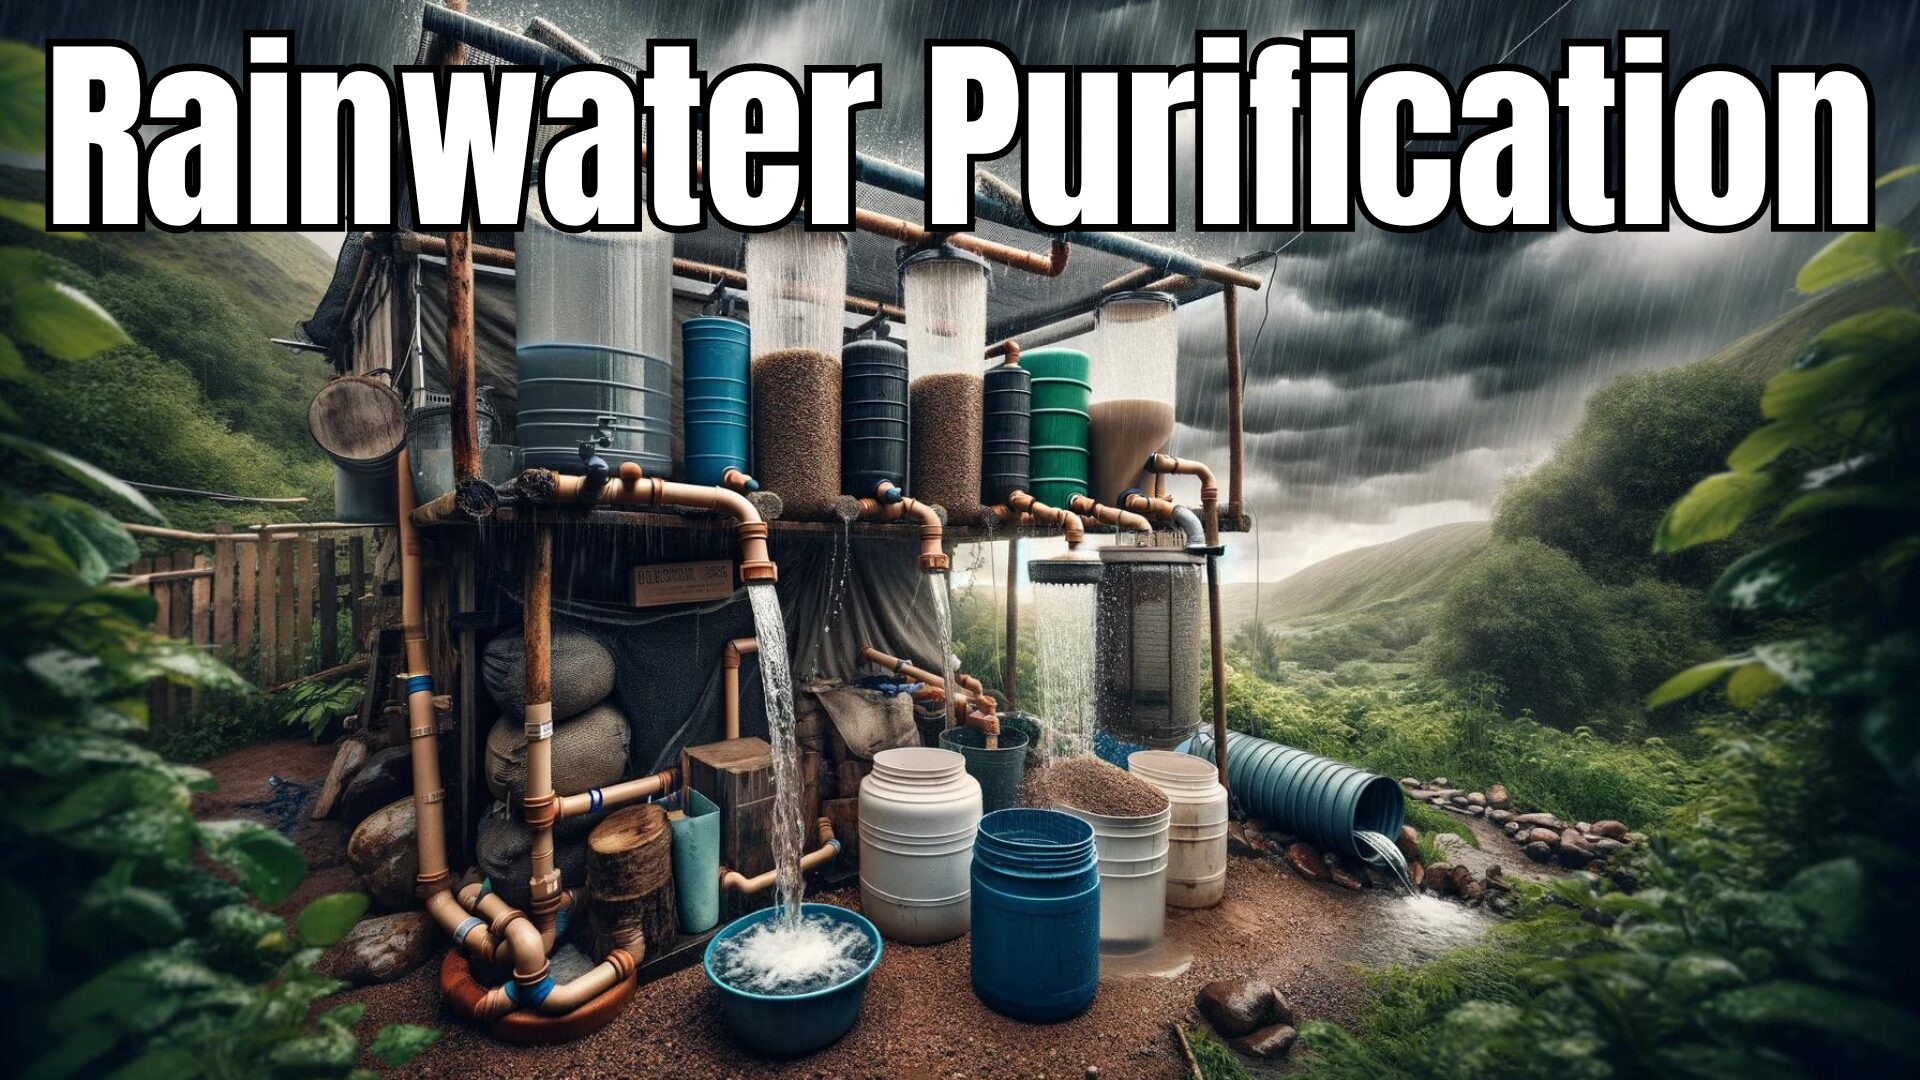 Rainwater Purification